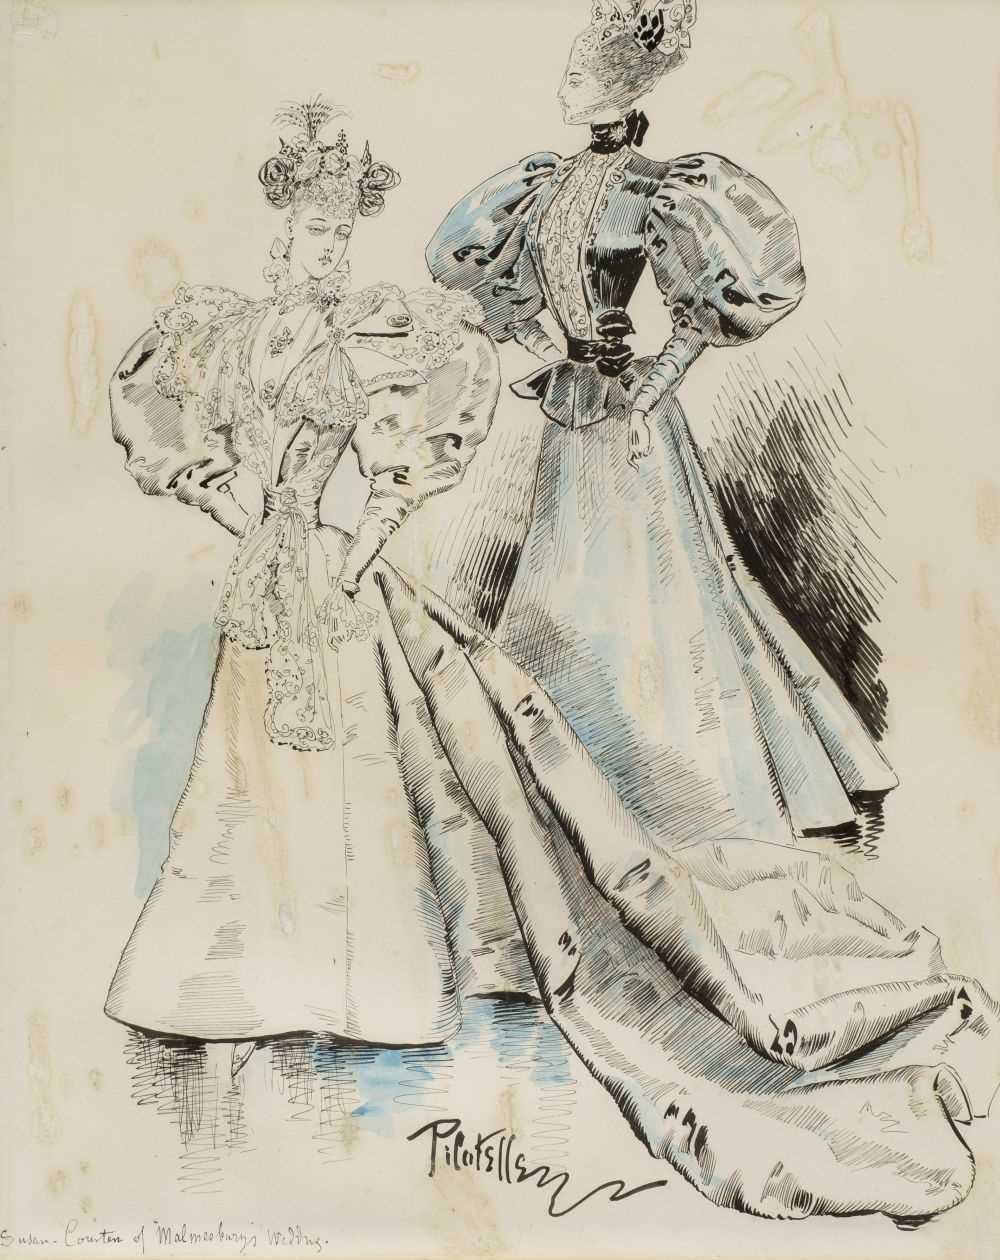 Lot 293 - Pilotelle (George, 1845-1918). Susan, Countess of Malmesbury's Wedding, 1896